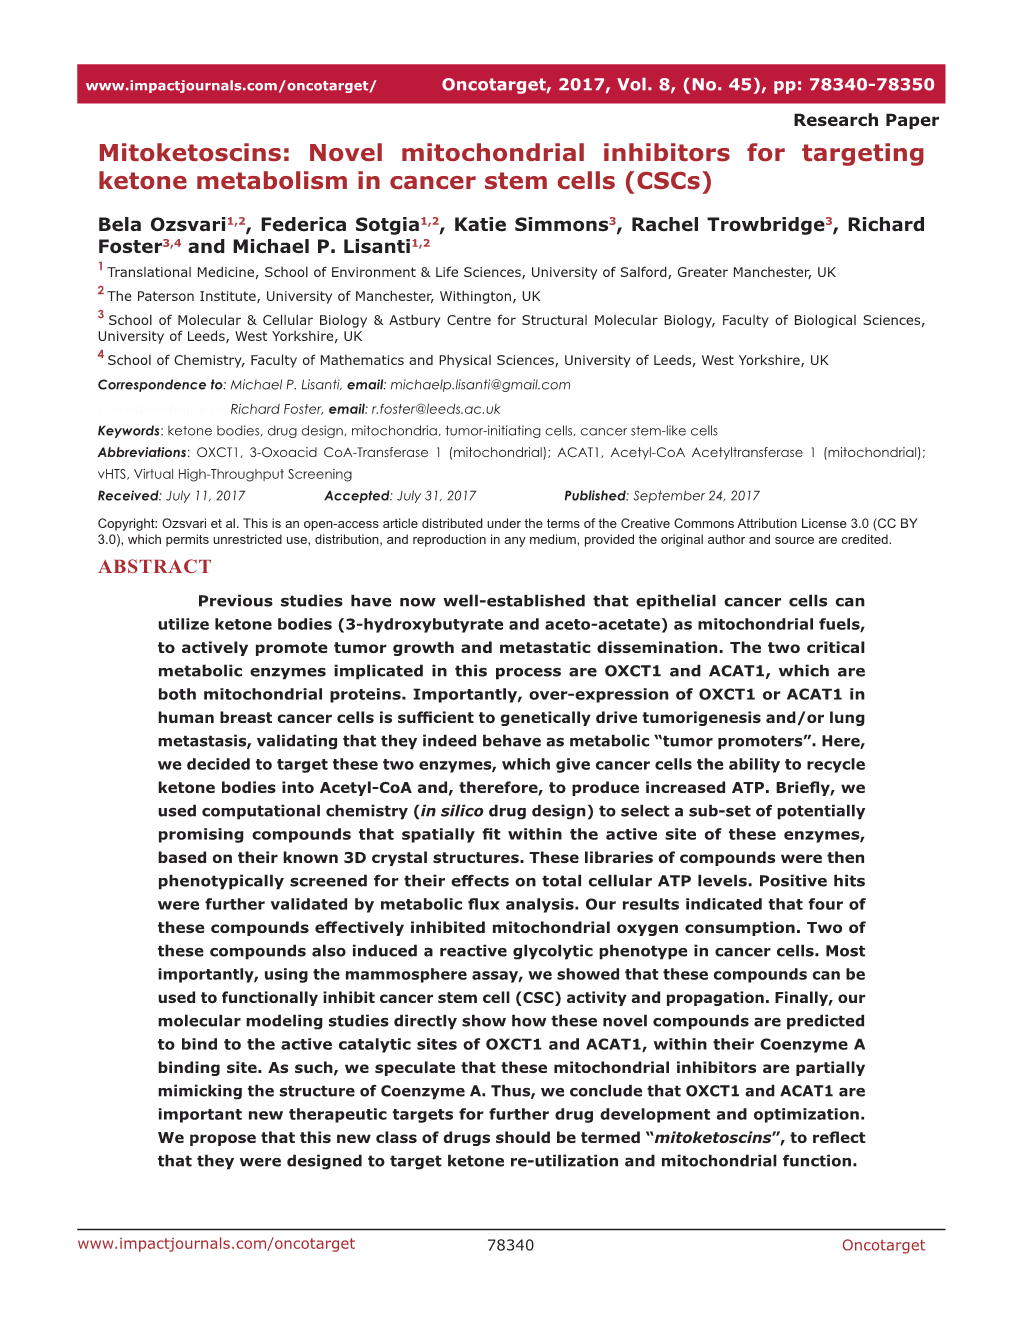 Novel Mitochondrial Inhibitors for Targeting Ketone Metabolism in Cancer Stem Cells (Cscs)